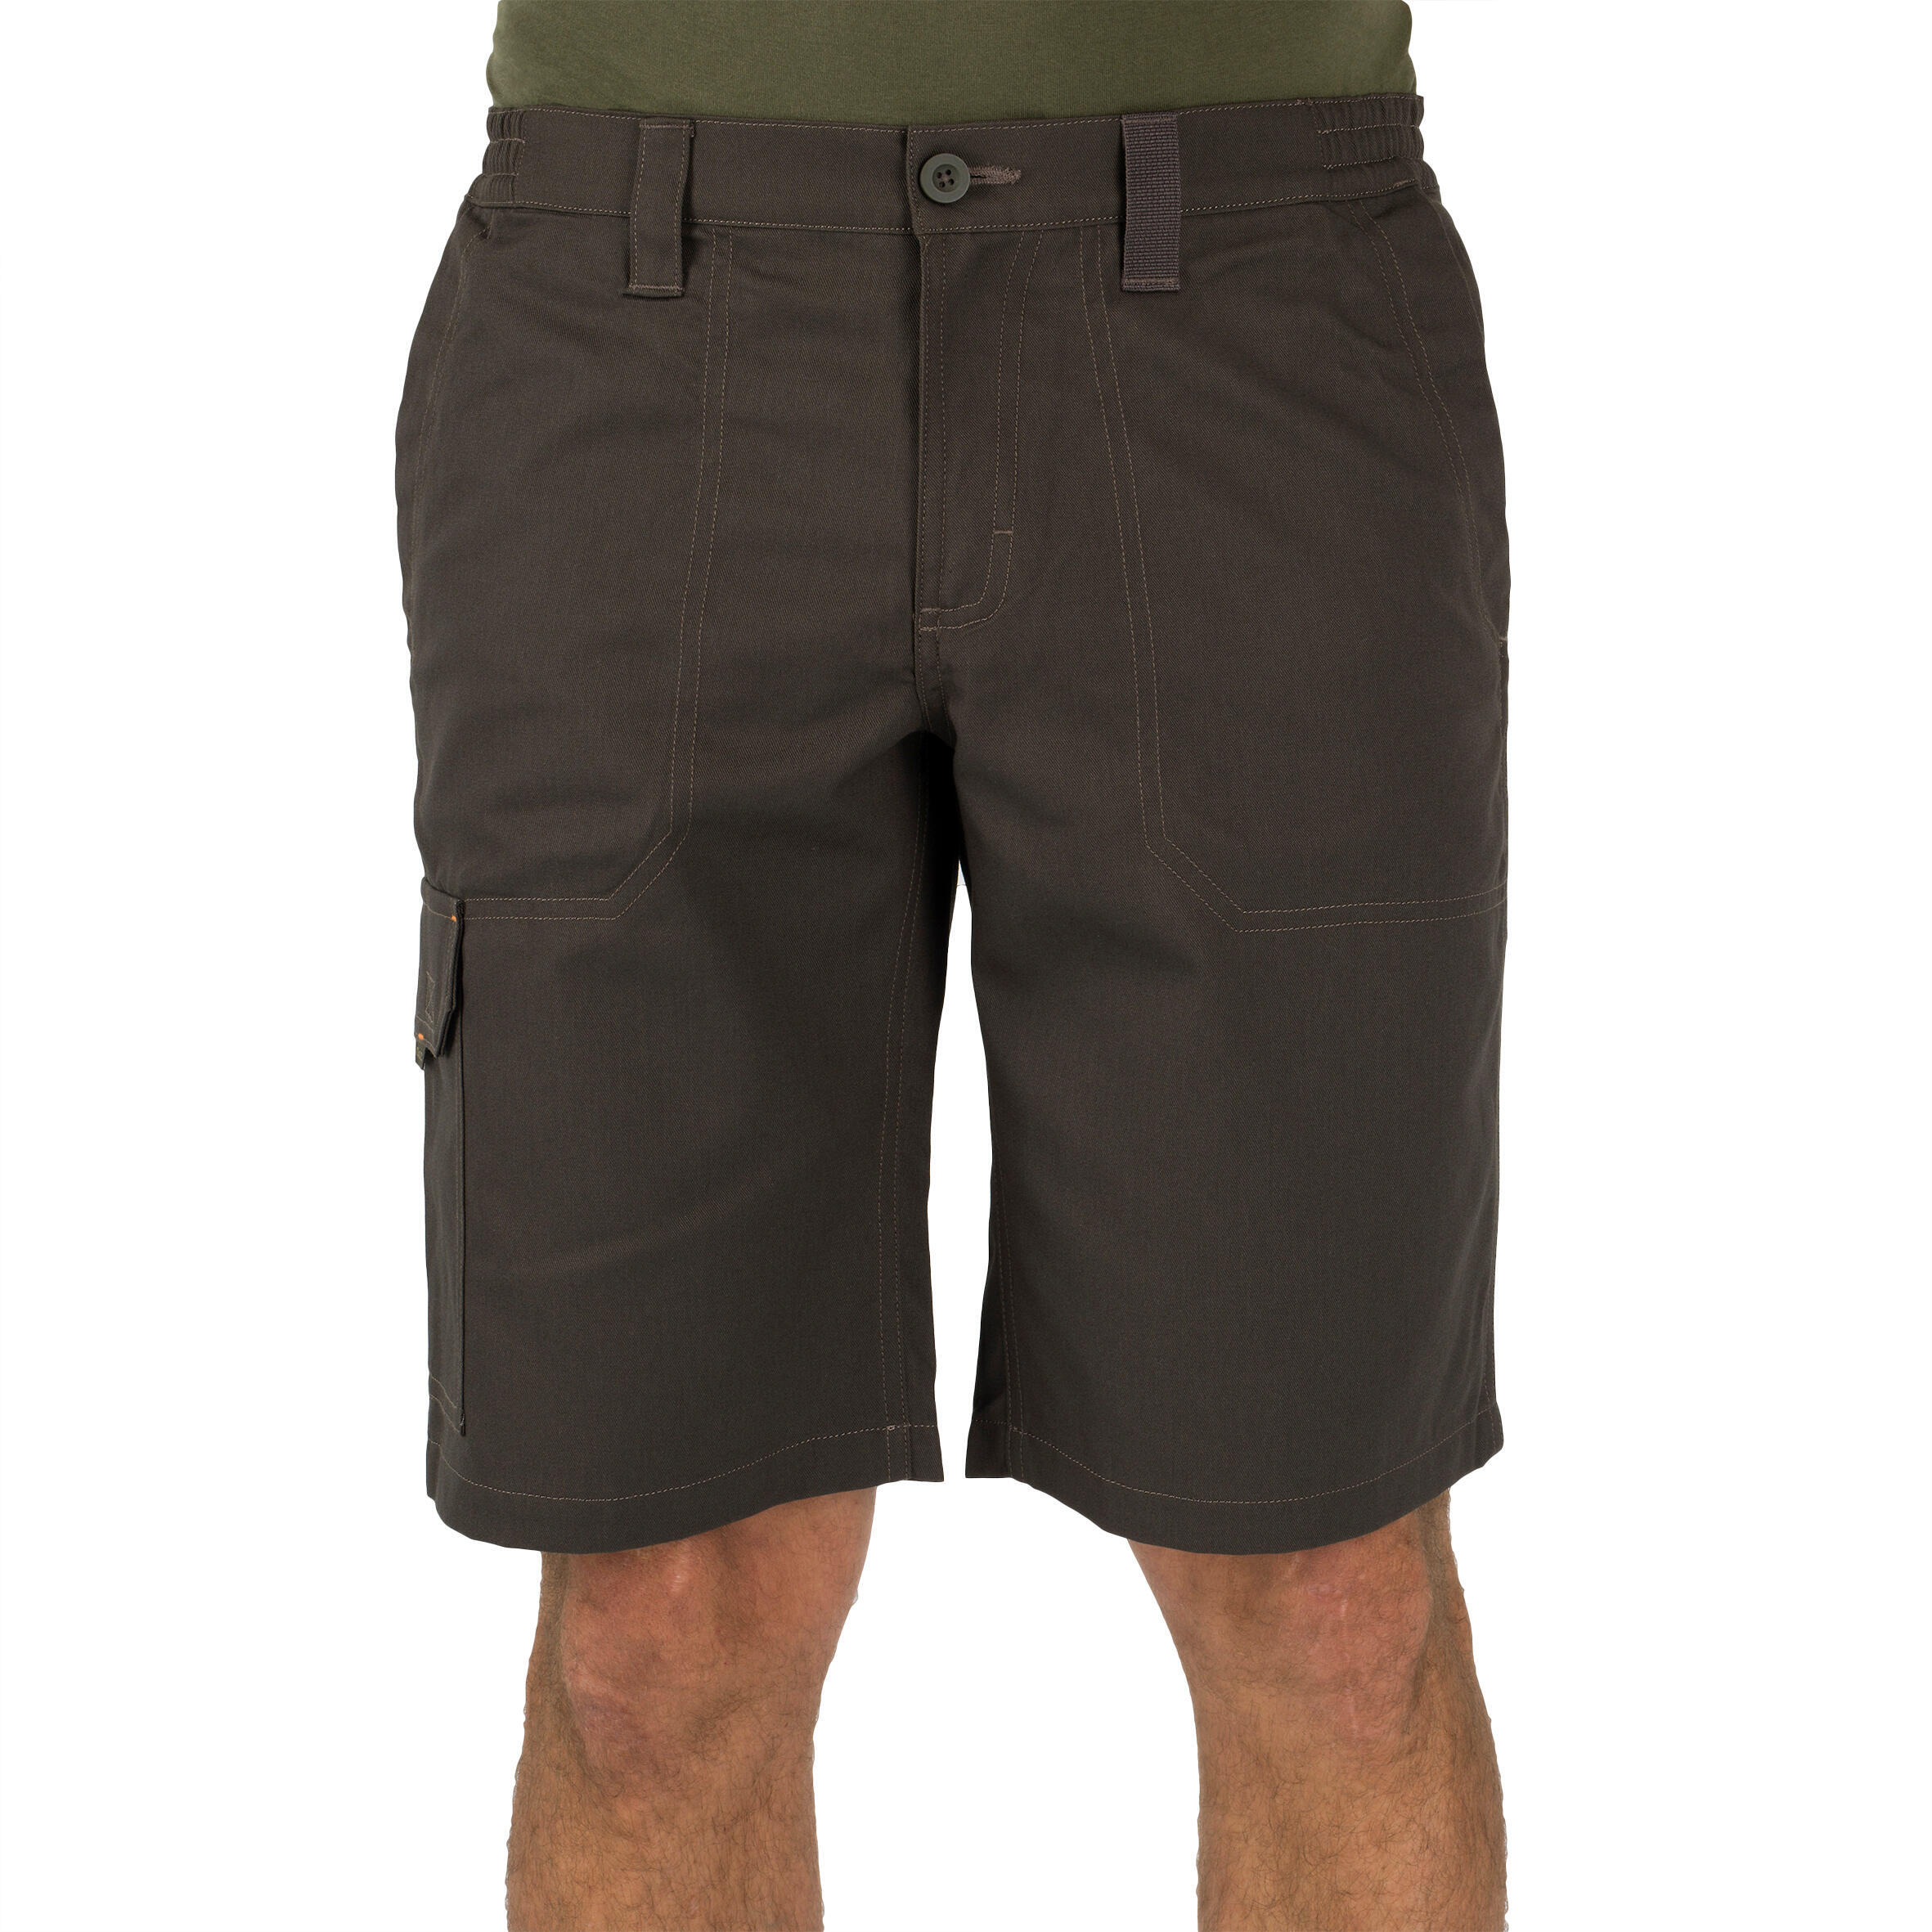 Bermuda Shorts - Green 2/9